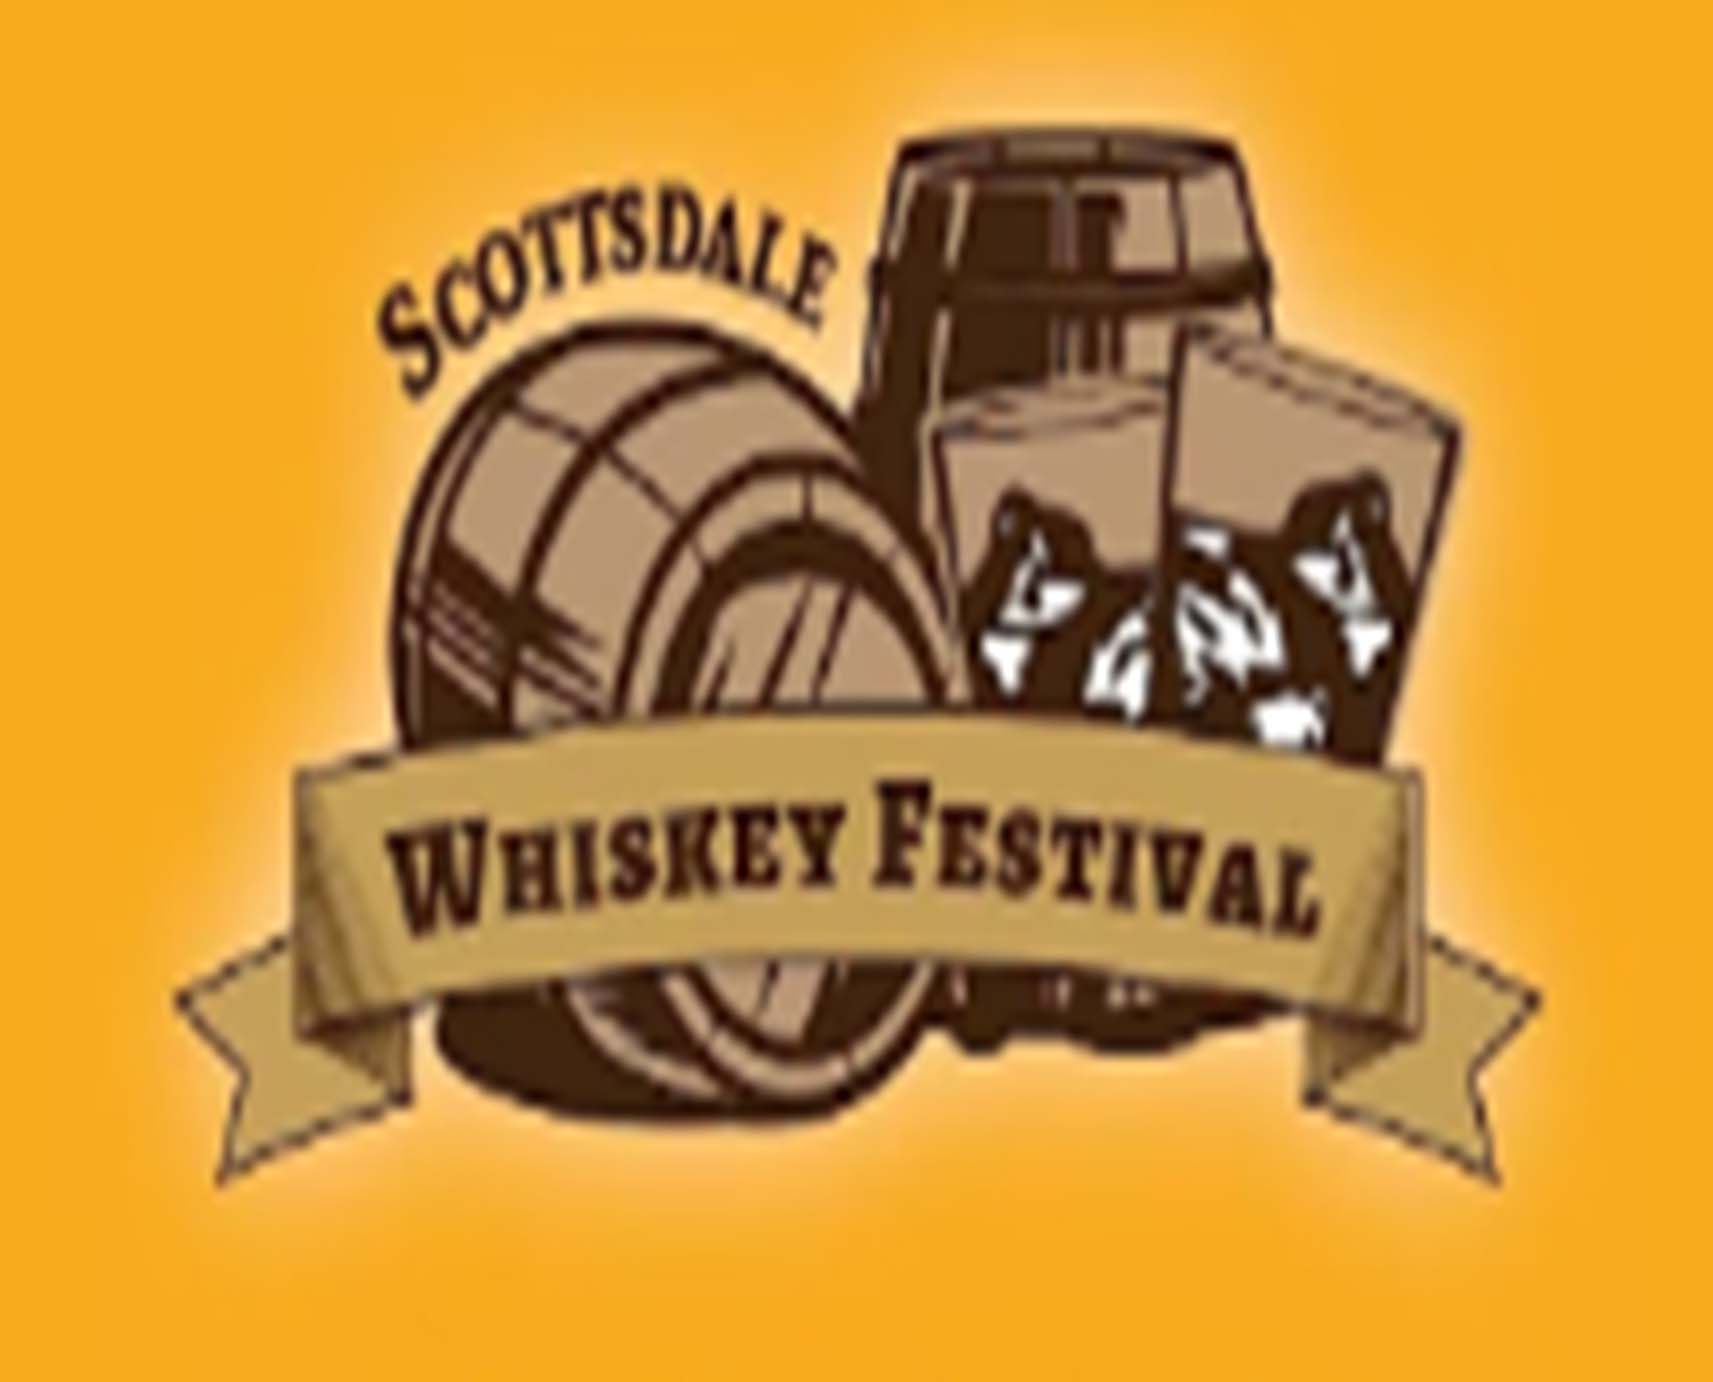 Scottsdale Whiskey Festival - Whiskey Tasting in Old Town!